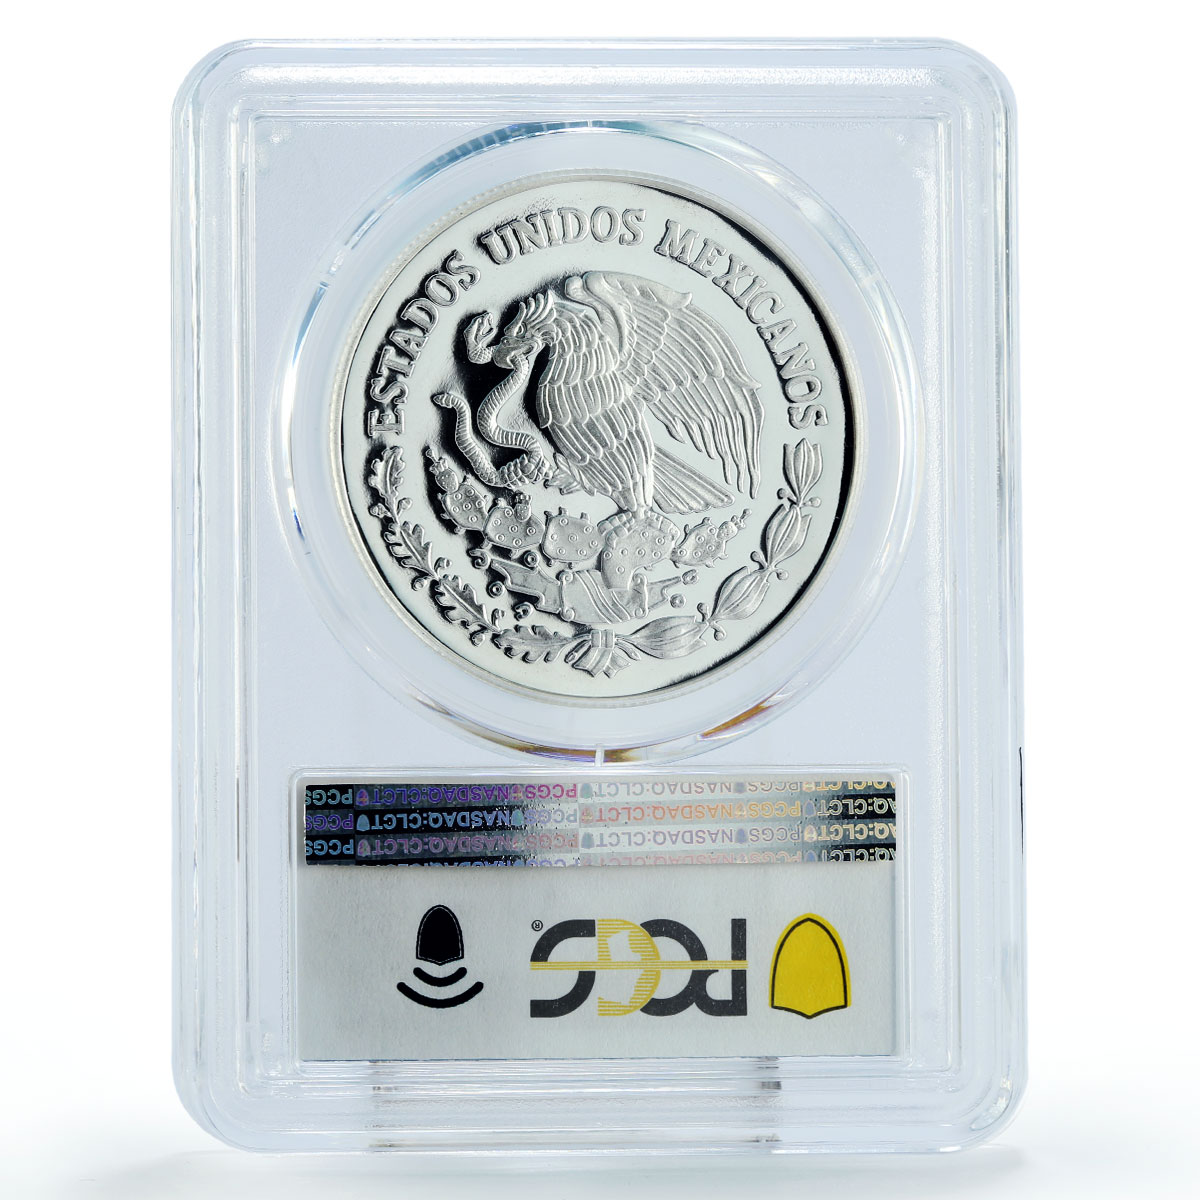 Mexico 10 pesos Aguascalientes City Coat of Arms PR69 PCGS silver coin 2005